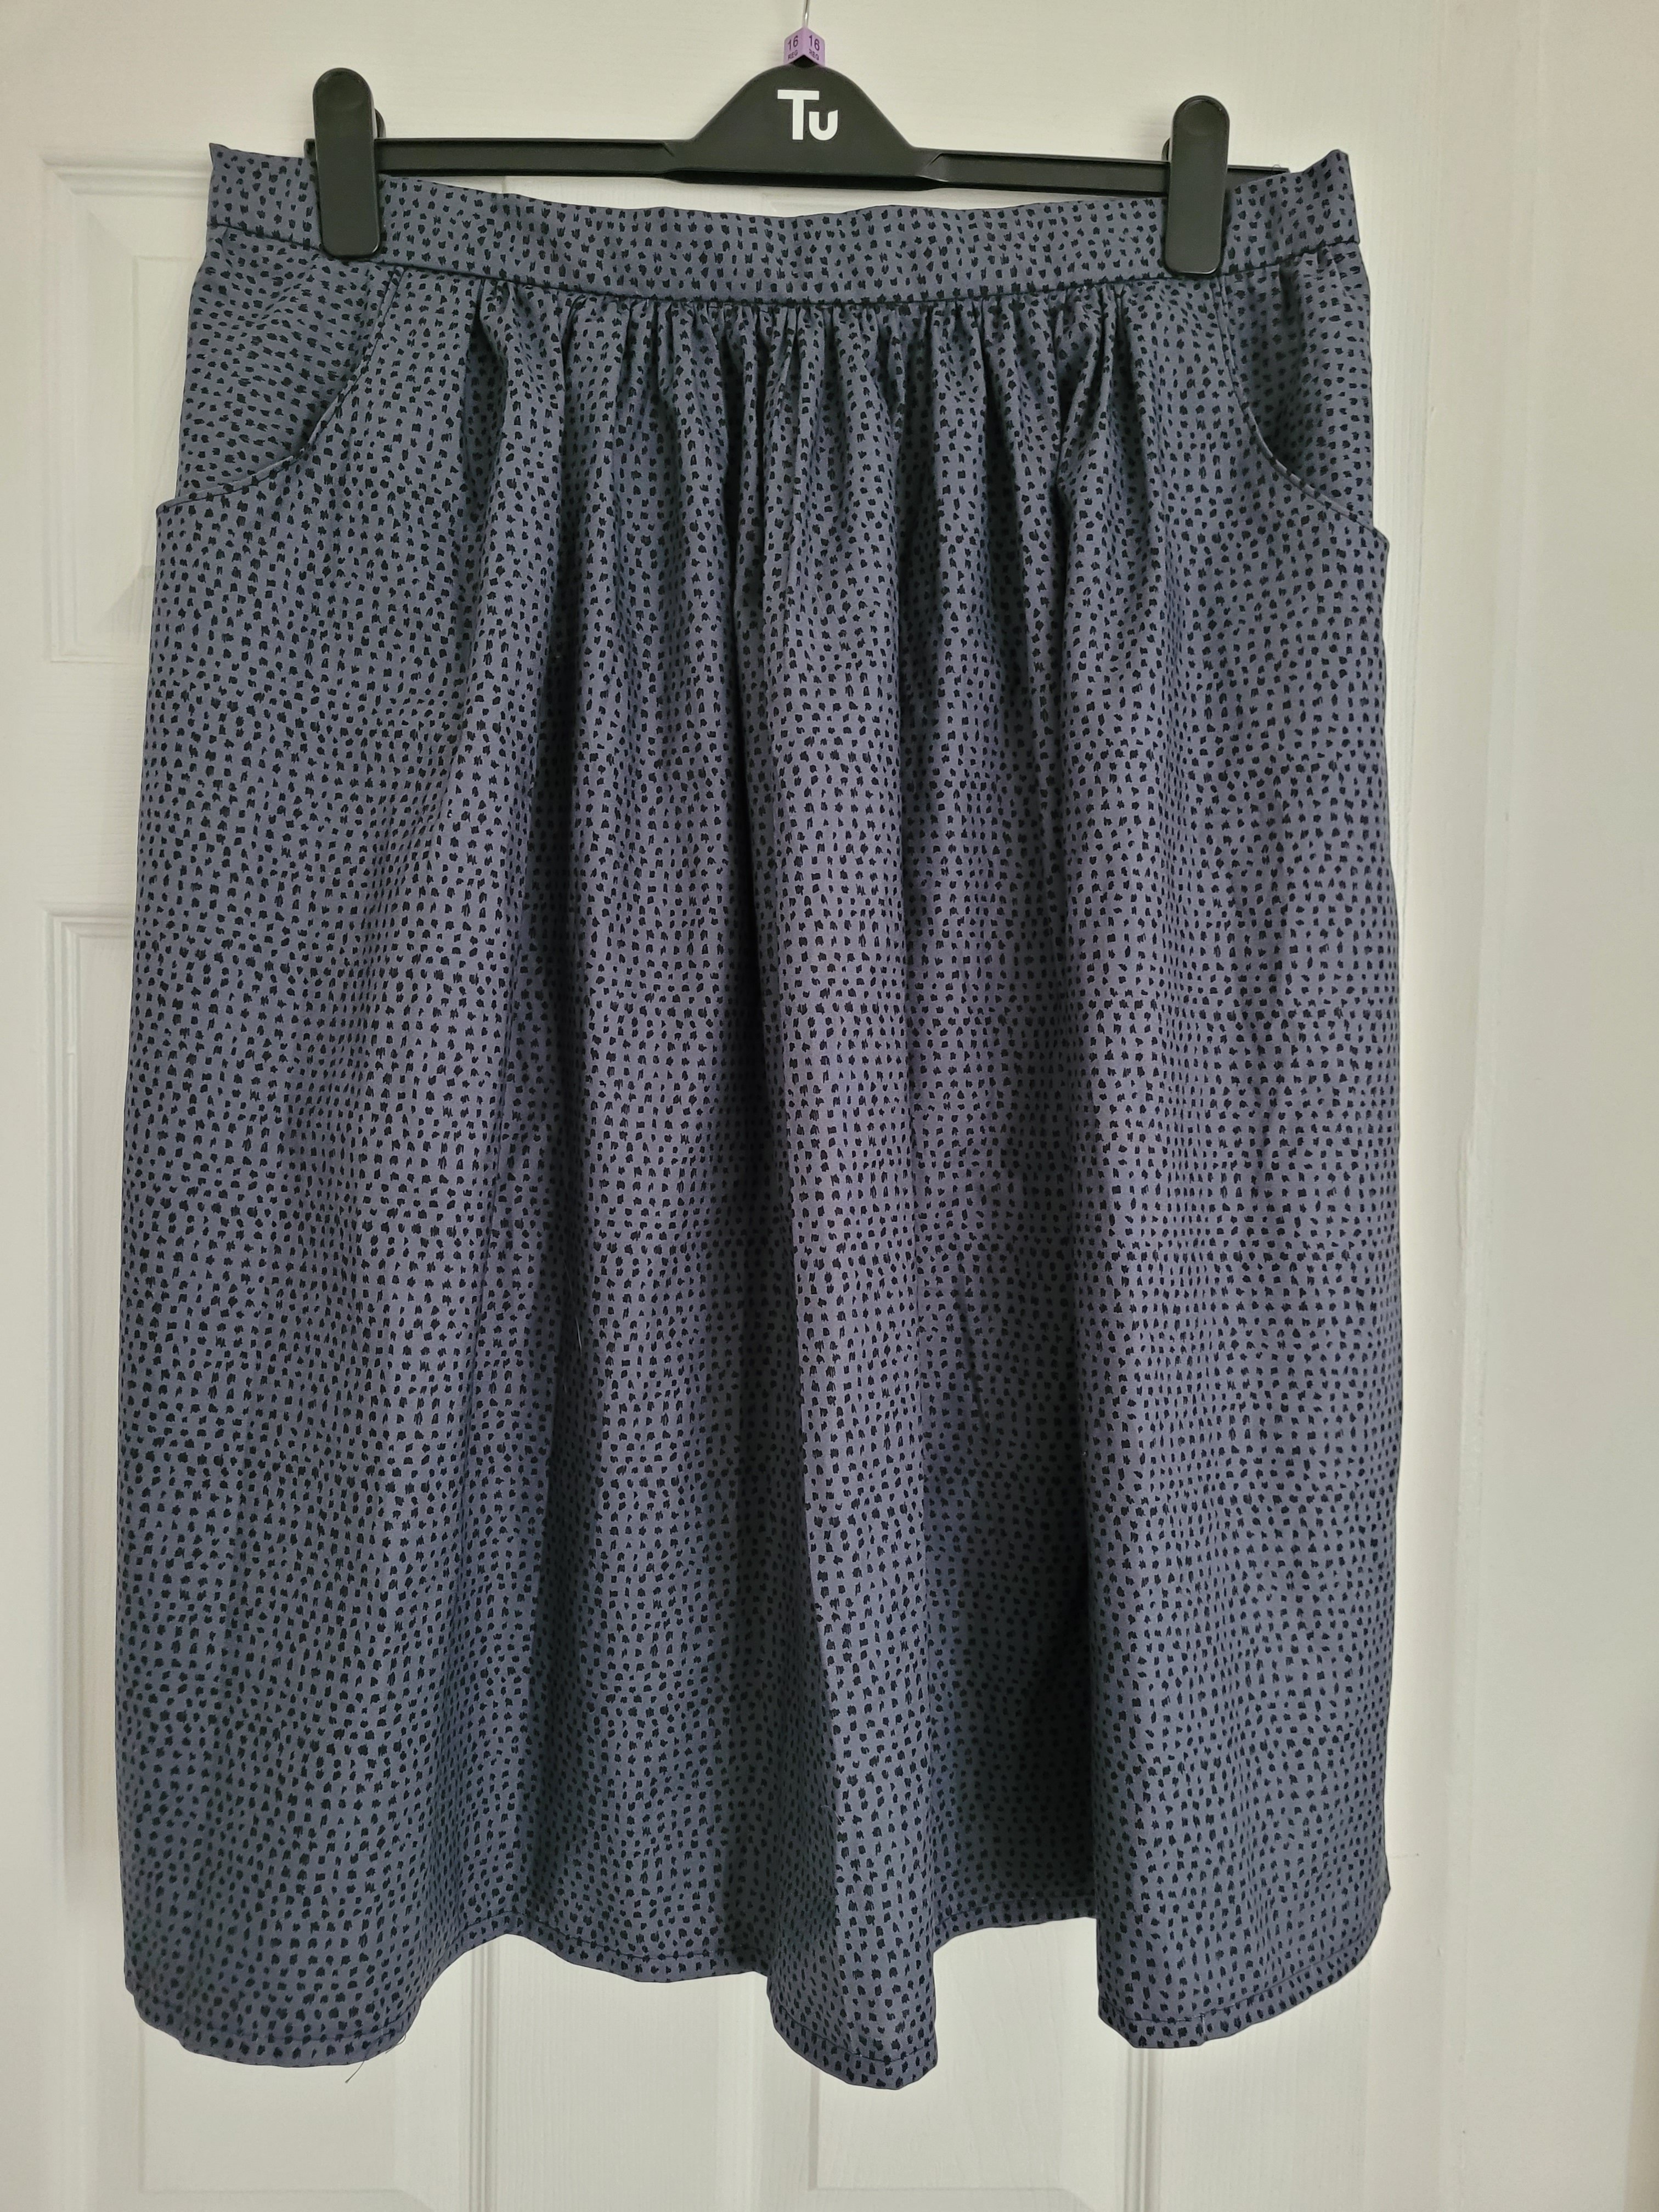 Dress Making for Beginners-Sew a Skirt